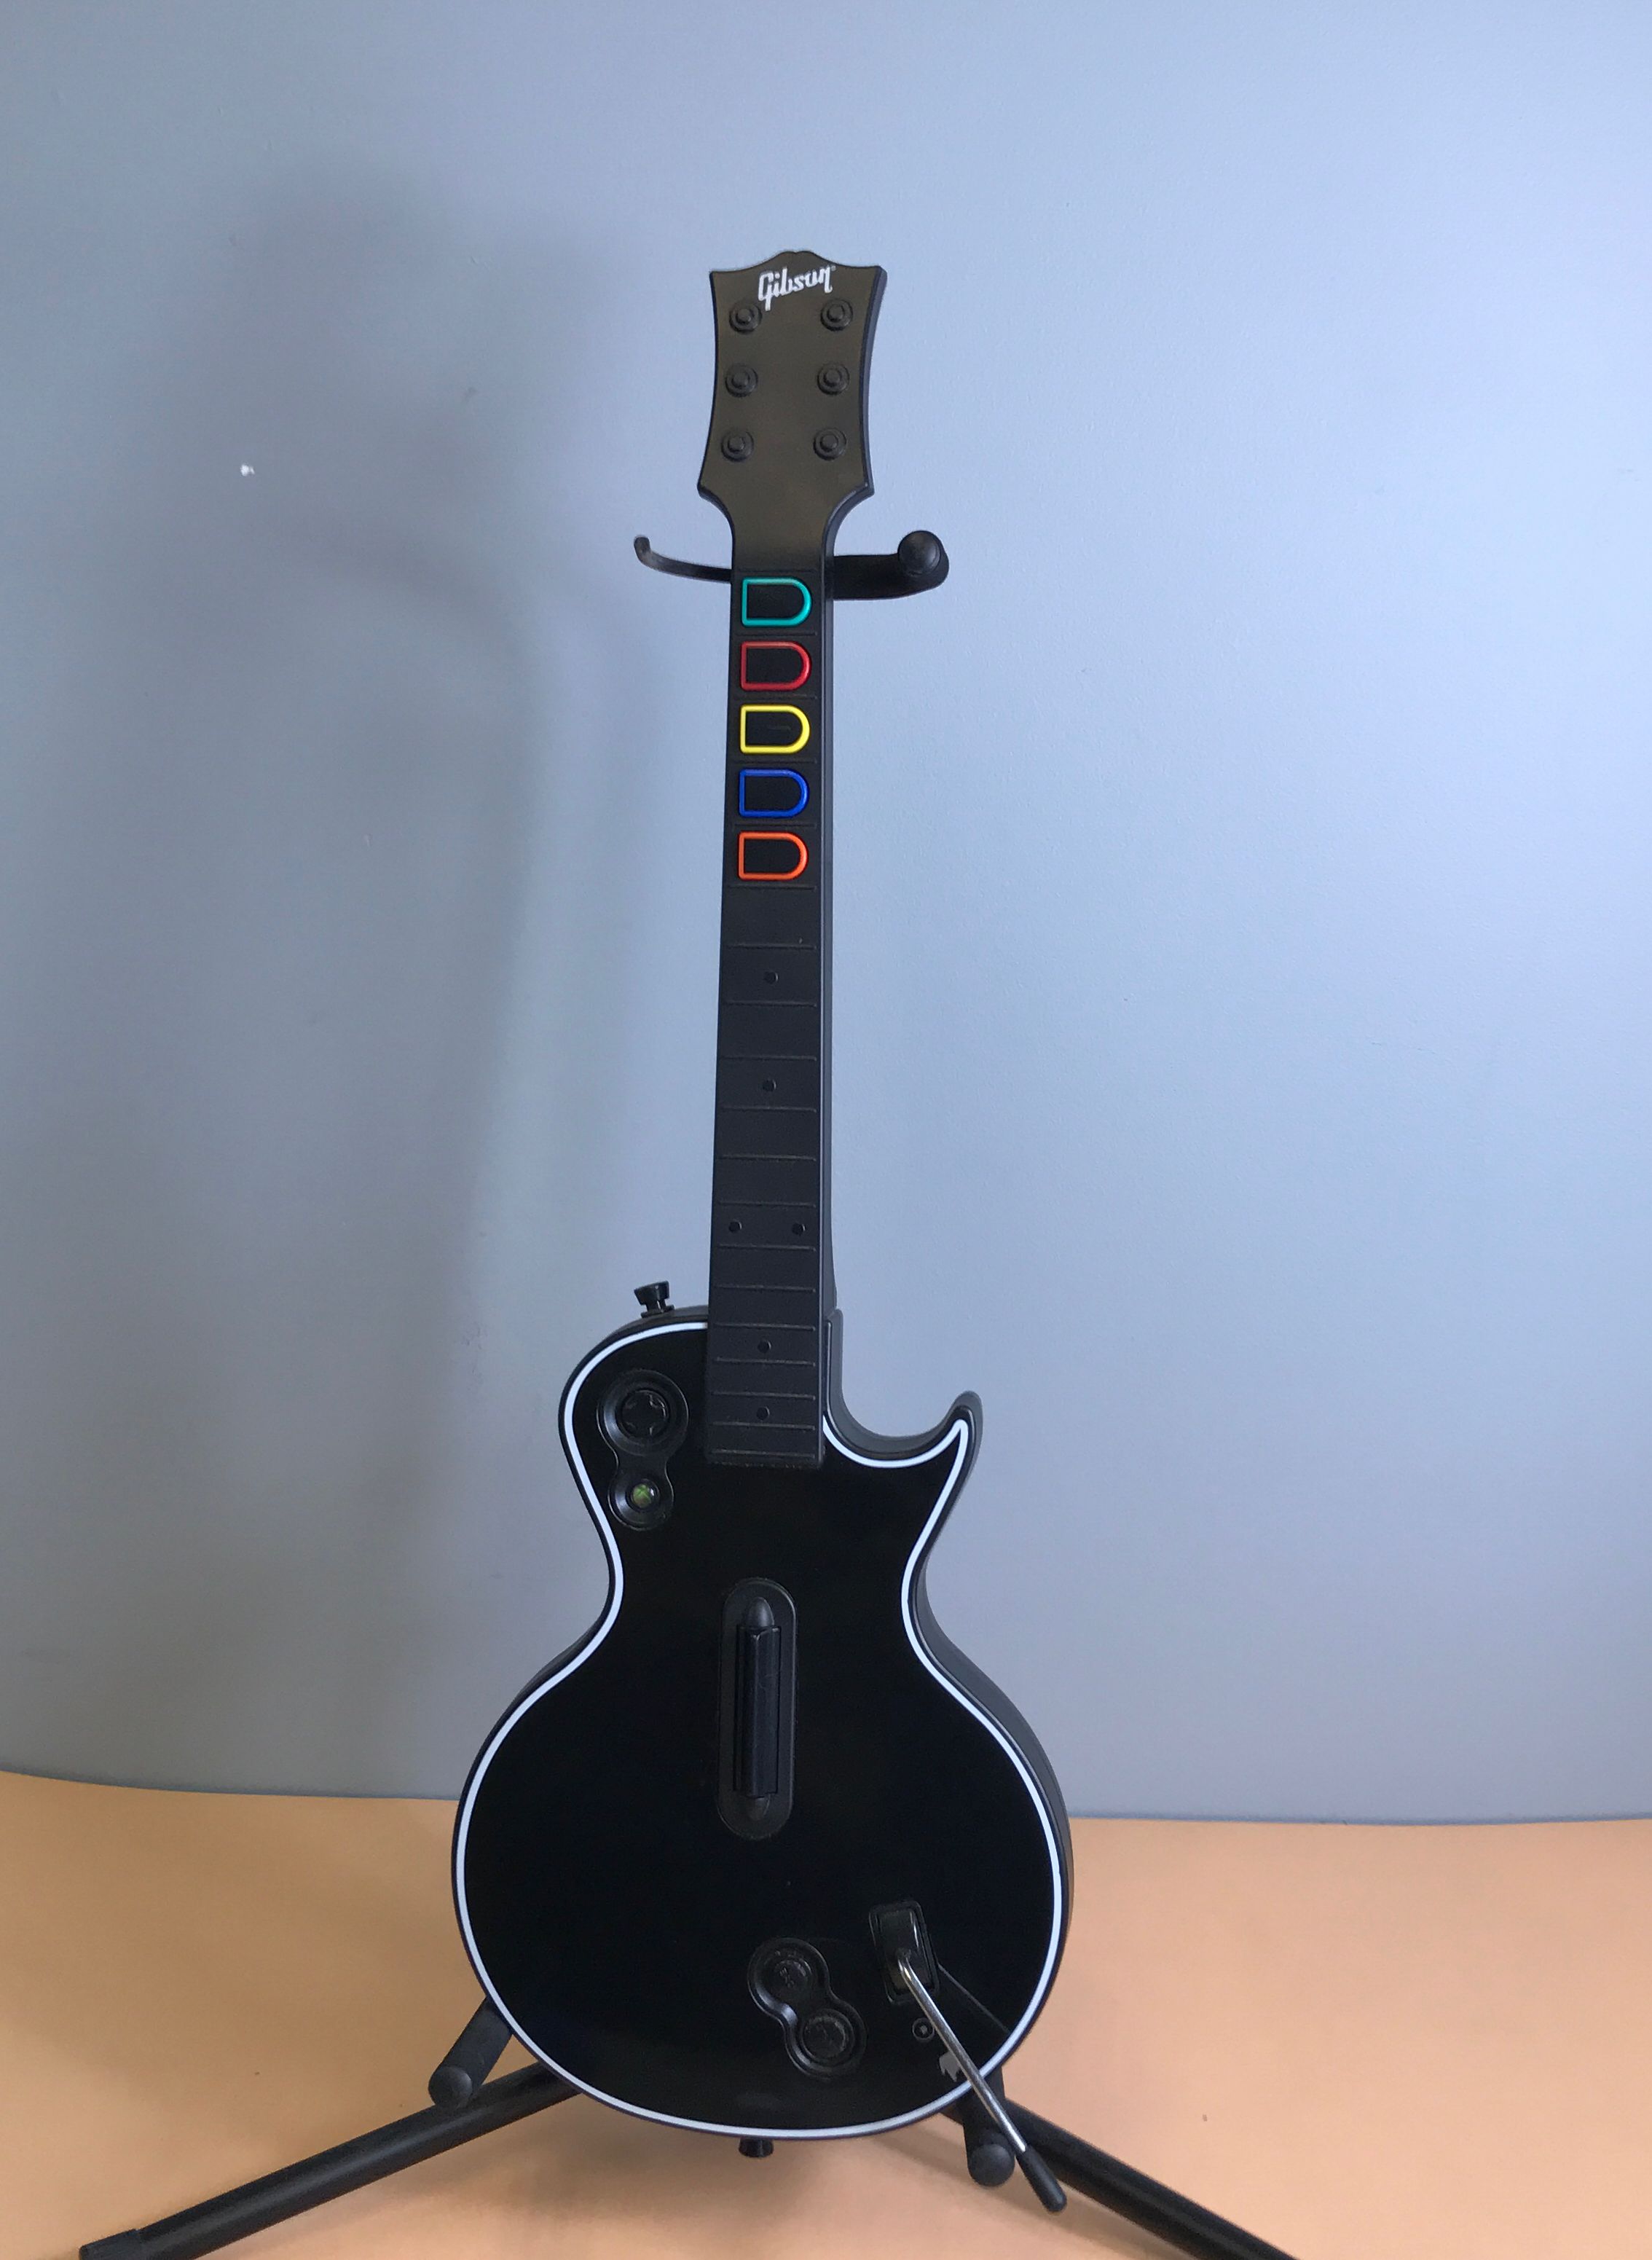 2 Guitar Hero Guitars- For Xbox 360- Brand: Redoctane and Harmonix (Untested)